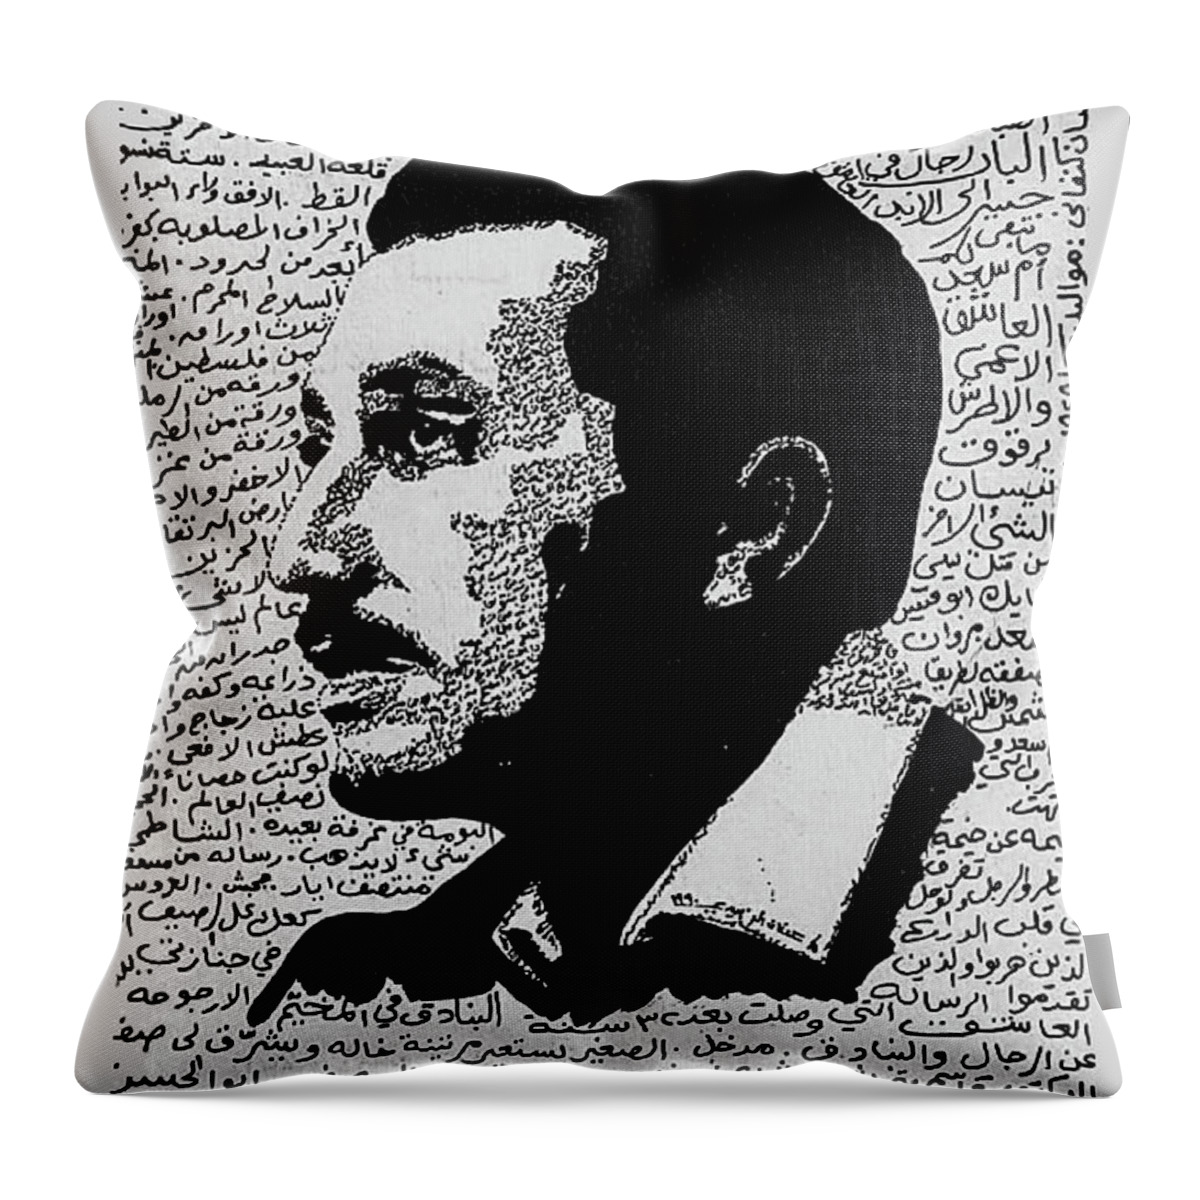 Ghassan Kanafani Throw Pillow featuring the photograph Ghassan Kanafani Portrait by Munir Alawi